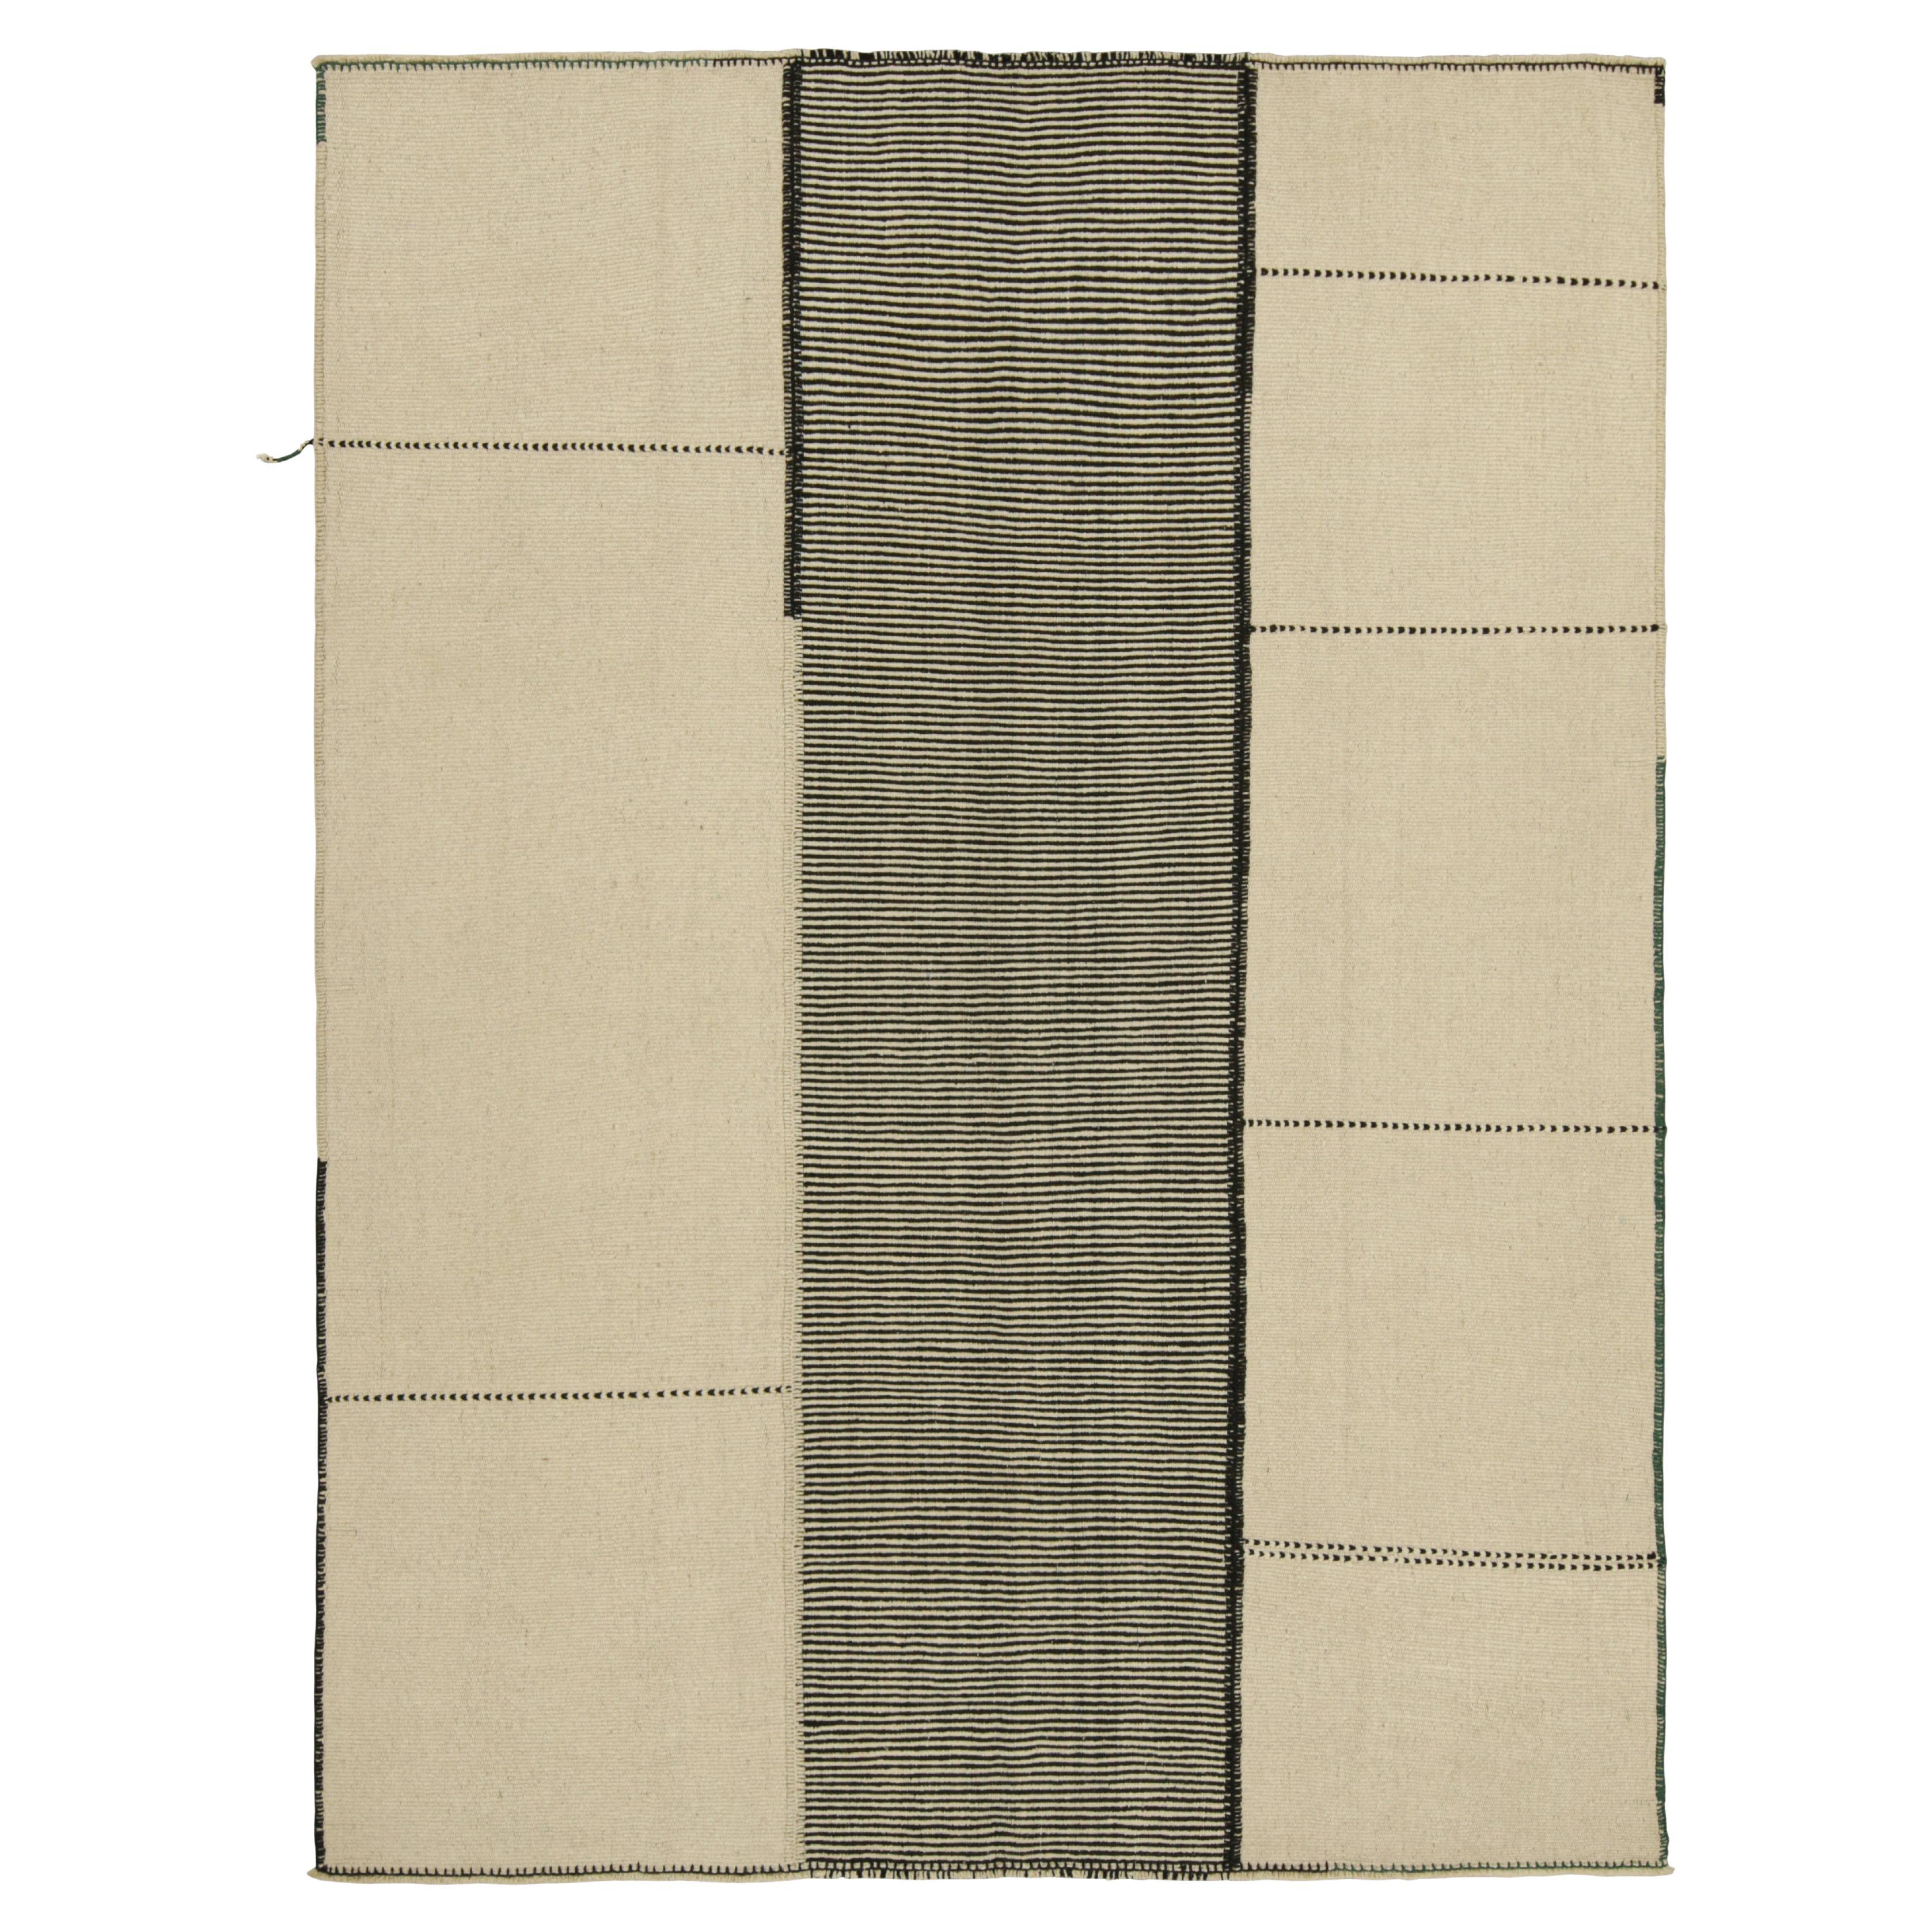 Rug & Kilim’s Contemporary Kilim in Cream White and Black Textural Stripes